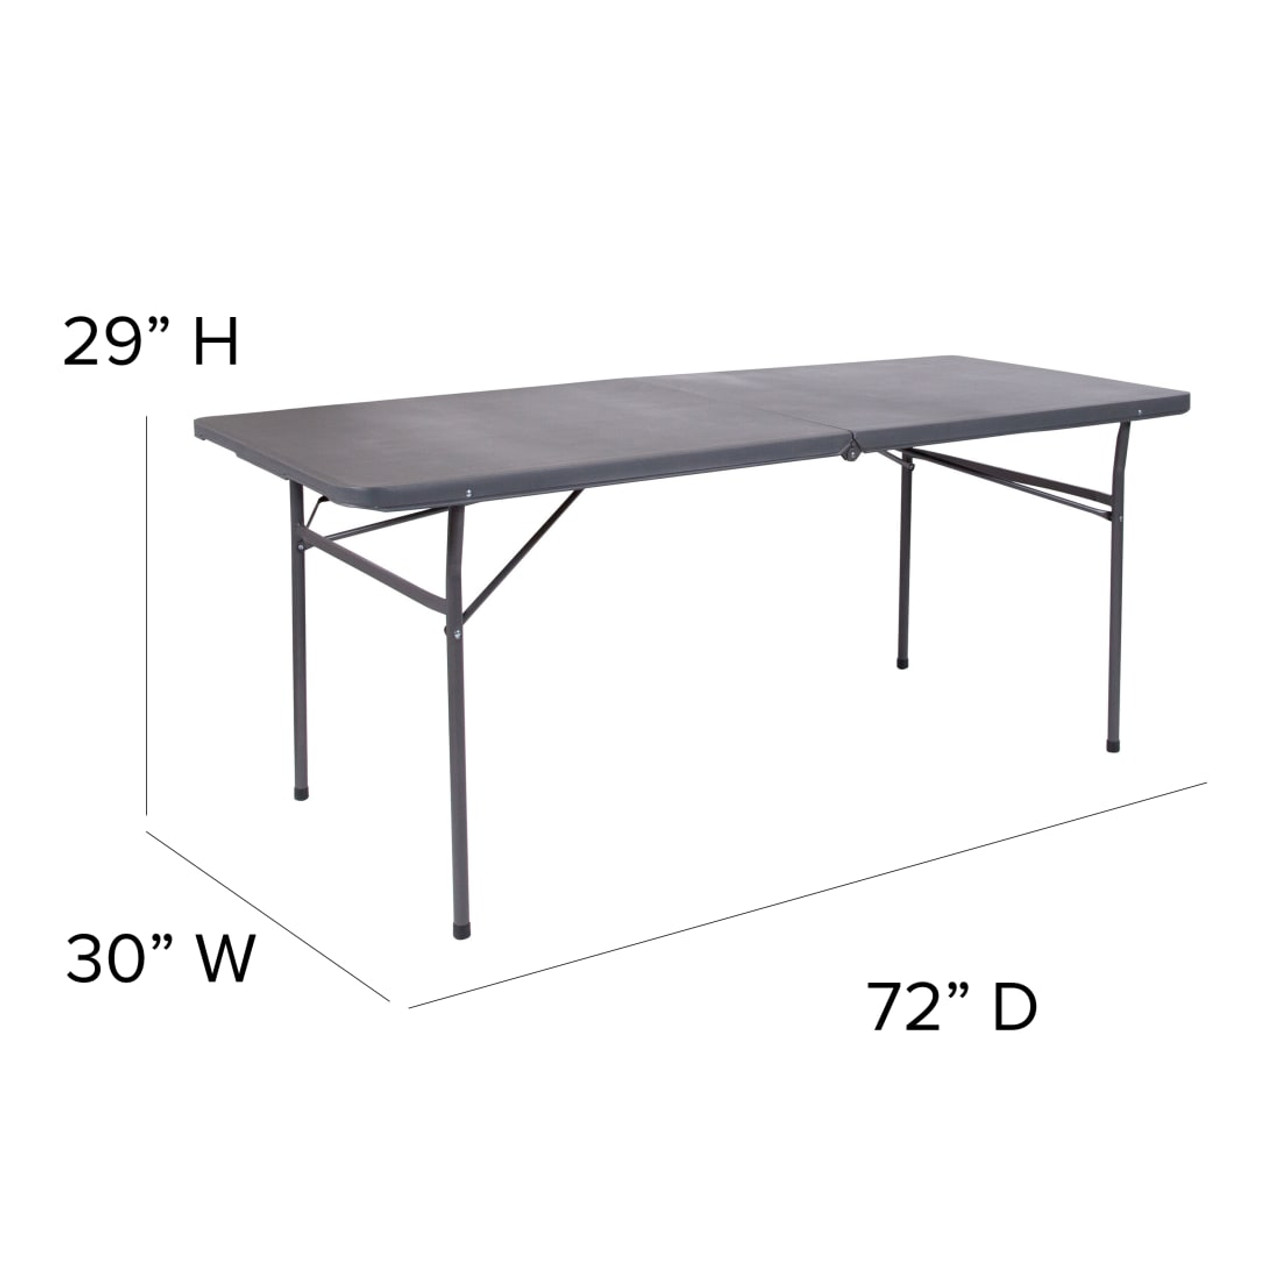 6-Foot Bi-Fold Dark Gray Plastic Folding Table with Carrying Handle